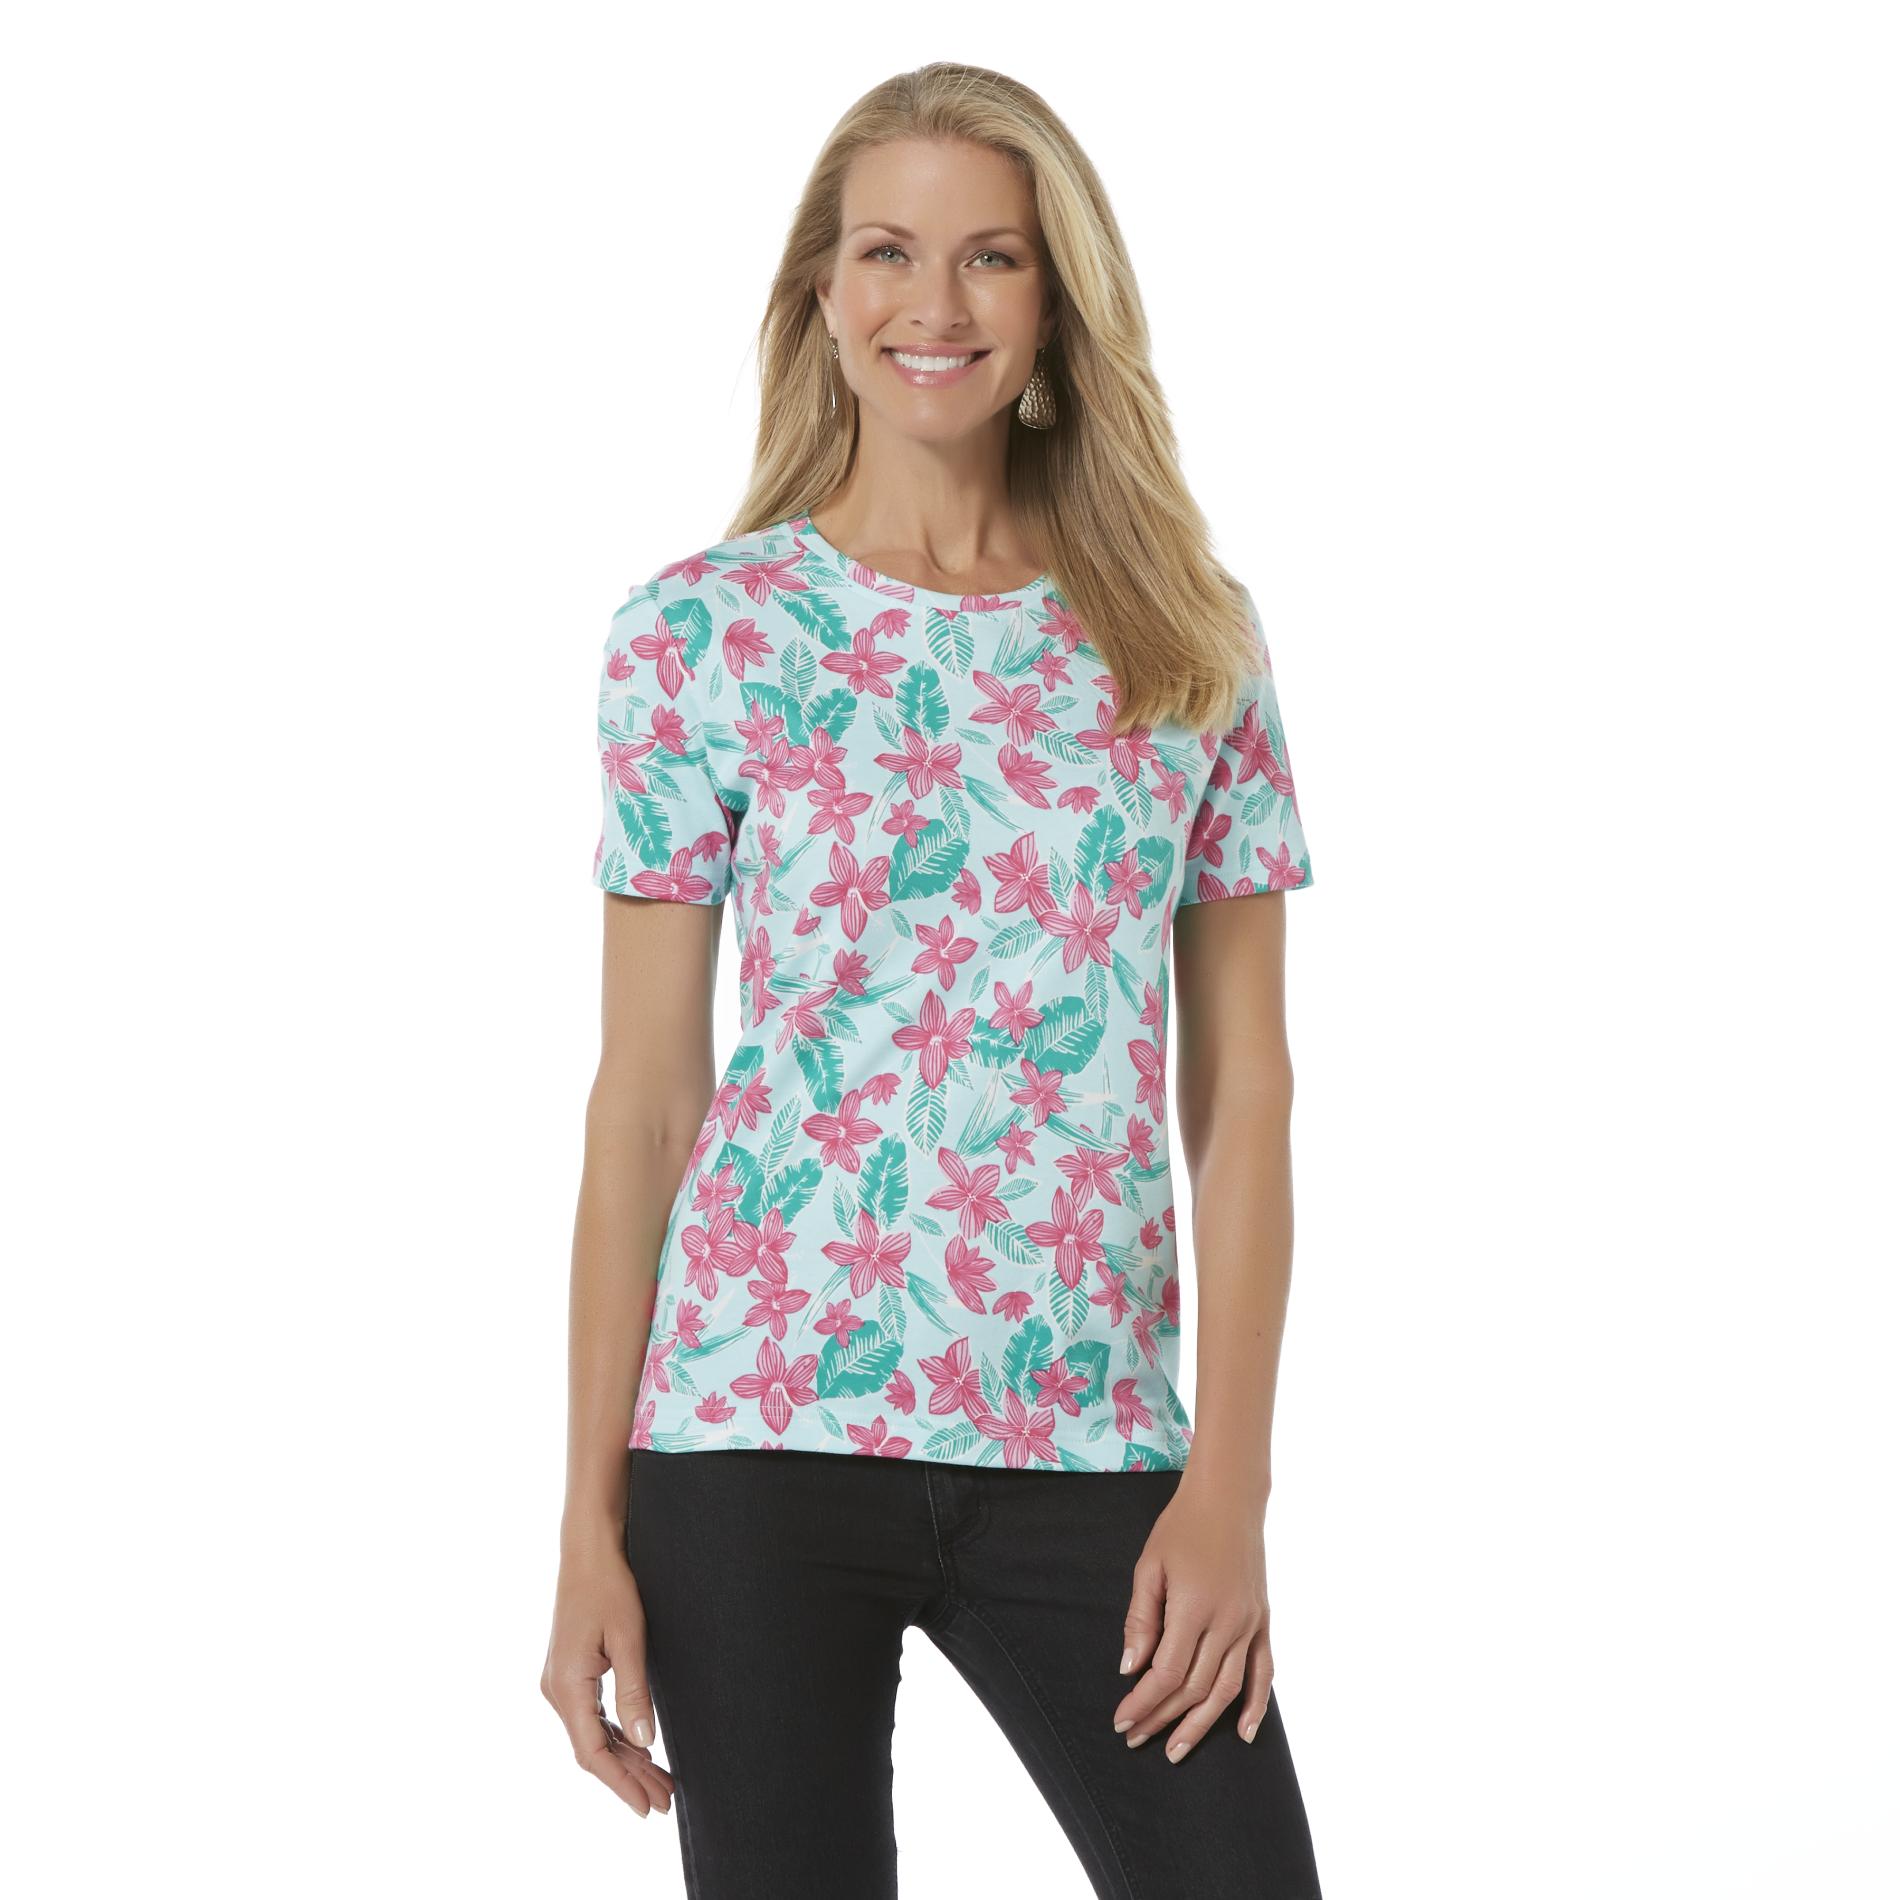 Basic Editions Women's T-Shirt - Floral Print